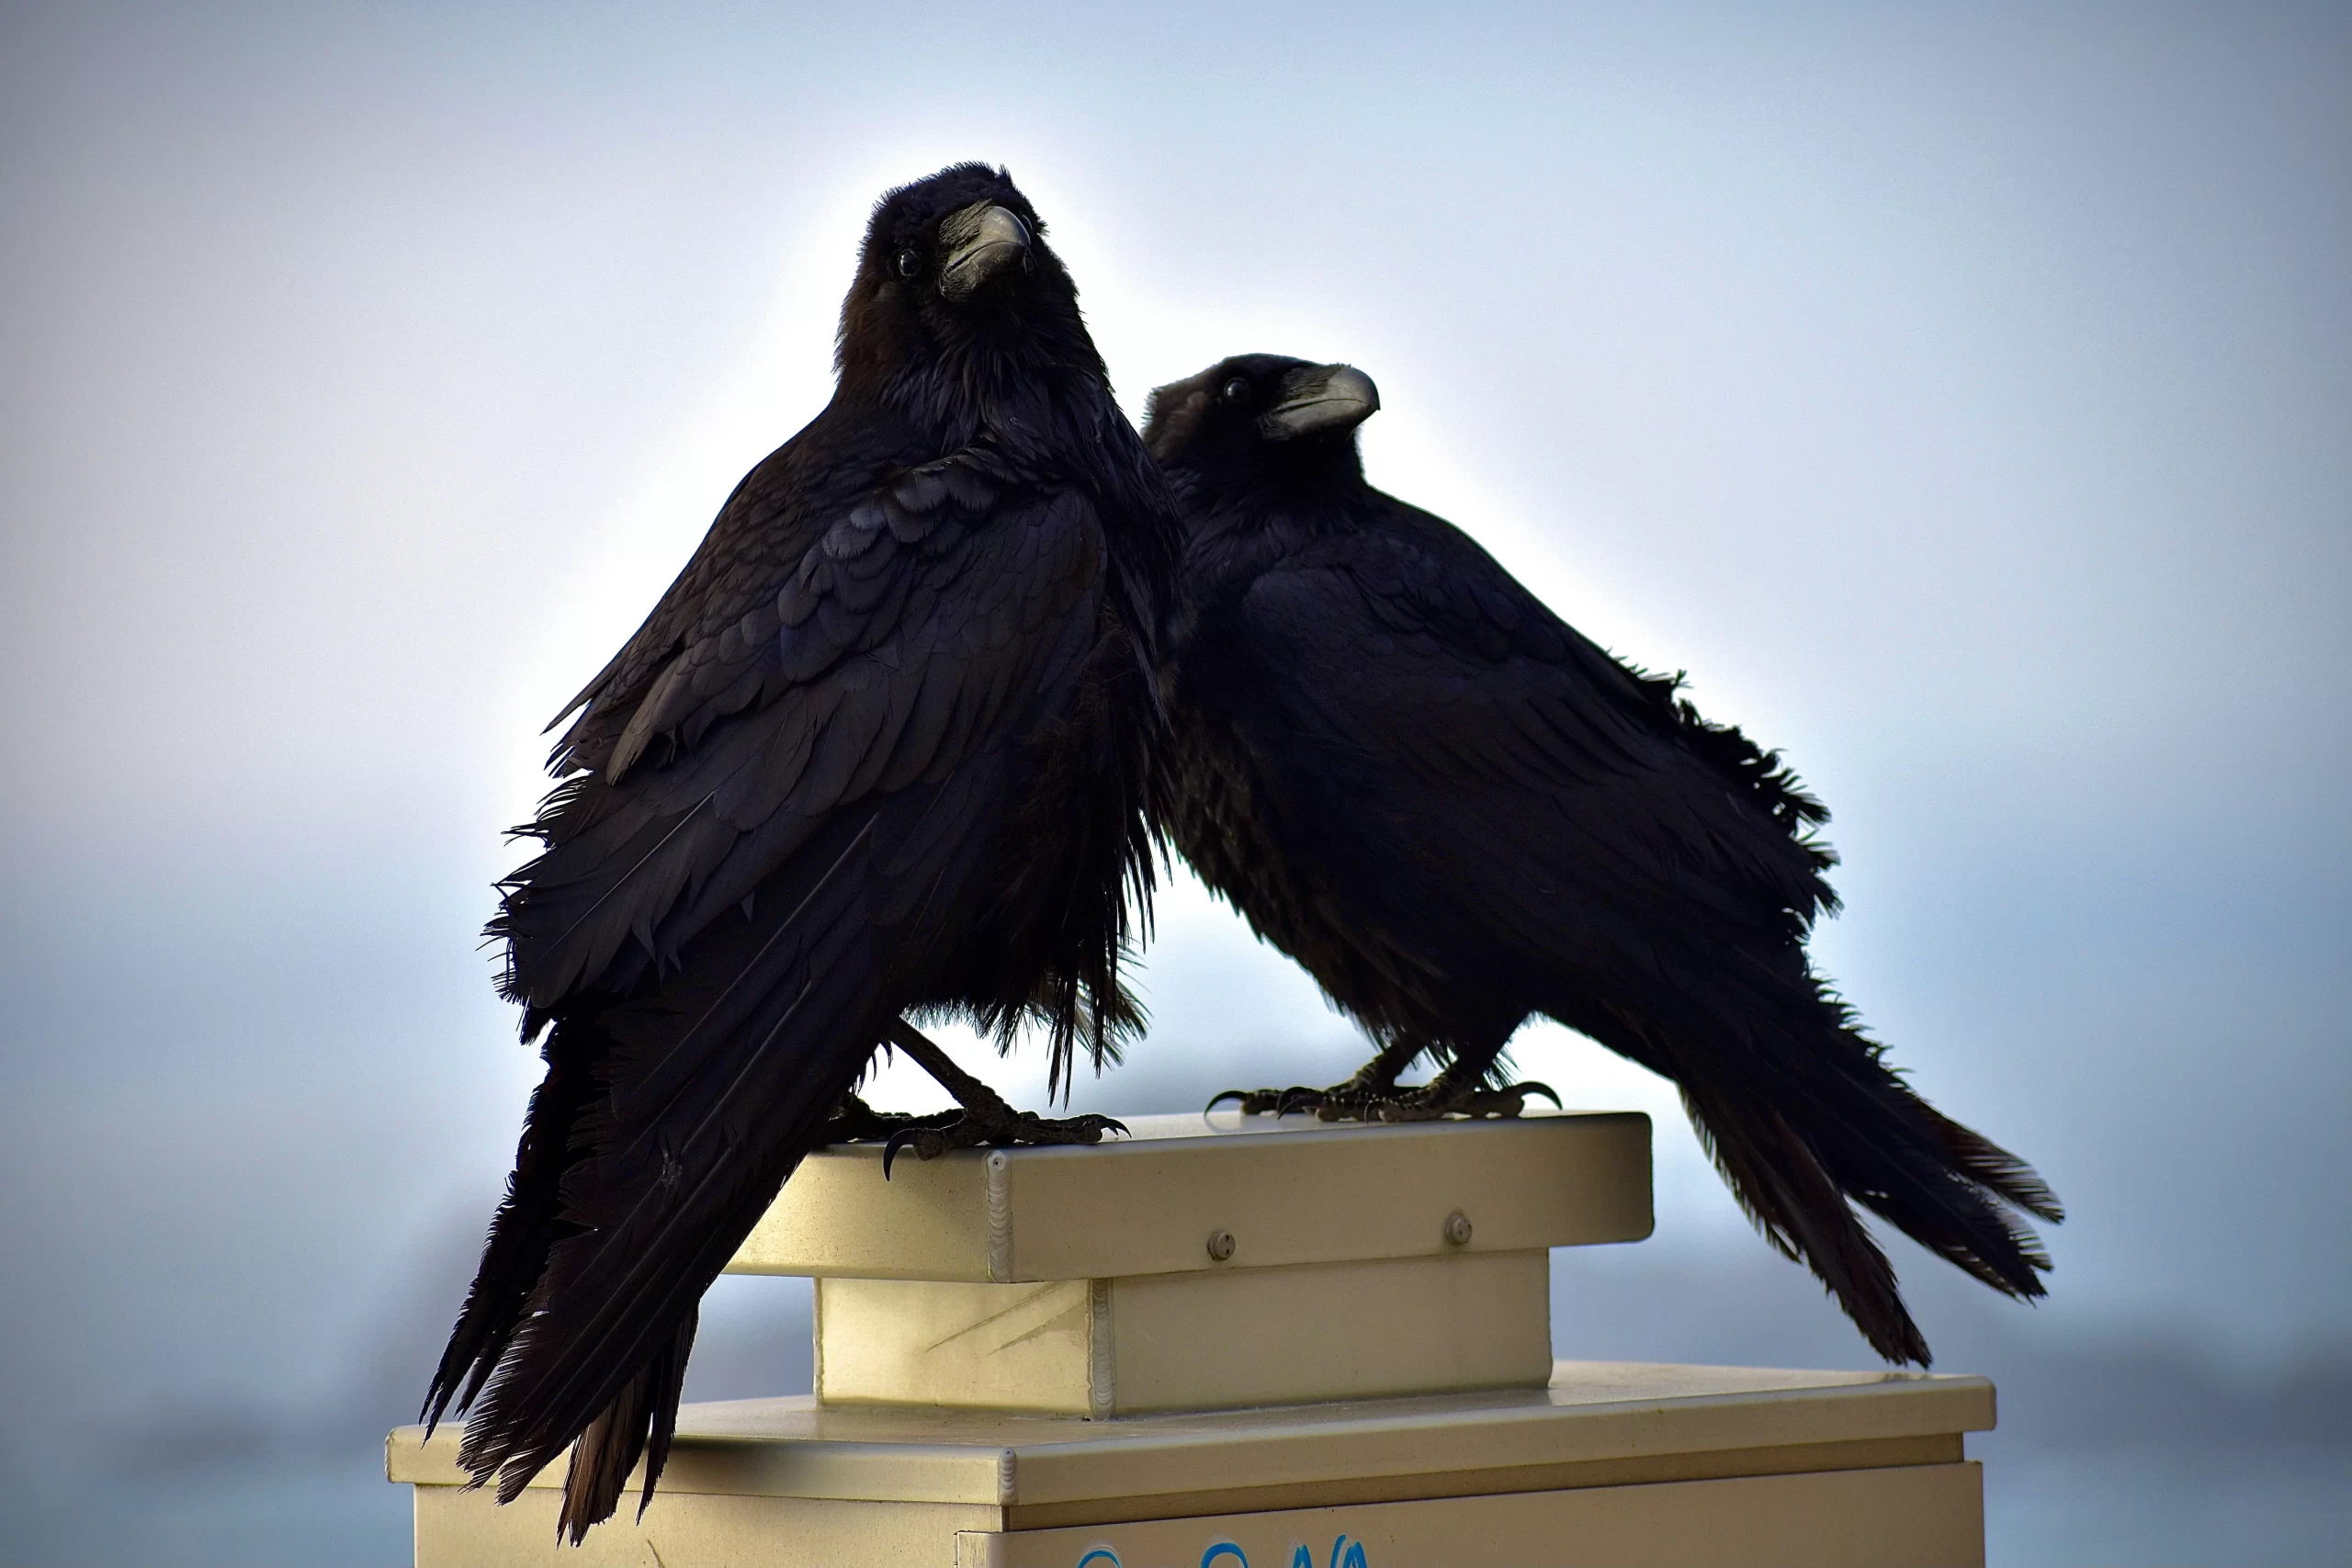 cristina-glebova- Published on July 2, 2021 NIKON CORPORATION, NIKON D3400 Free to use under the Unsplash License Close up ravens resting on post during daytime -unsplash